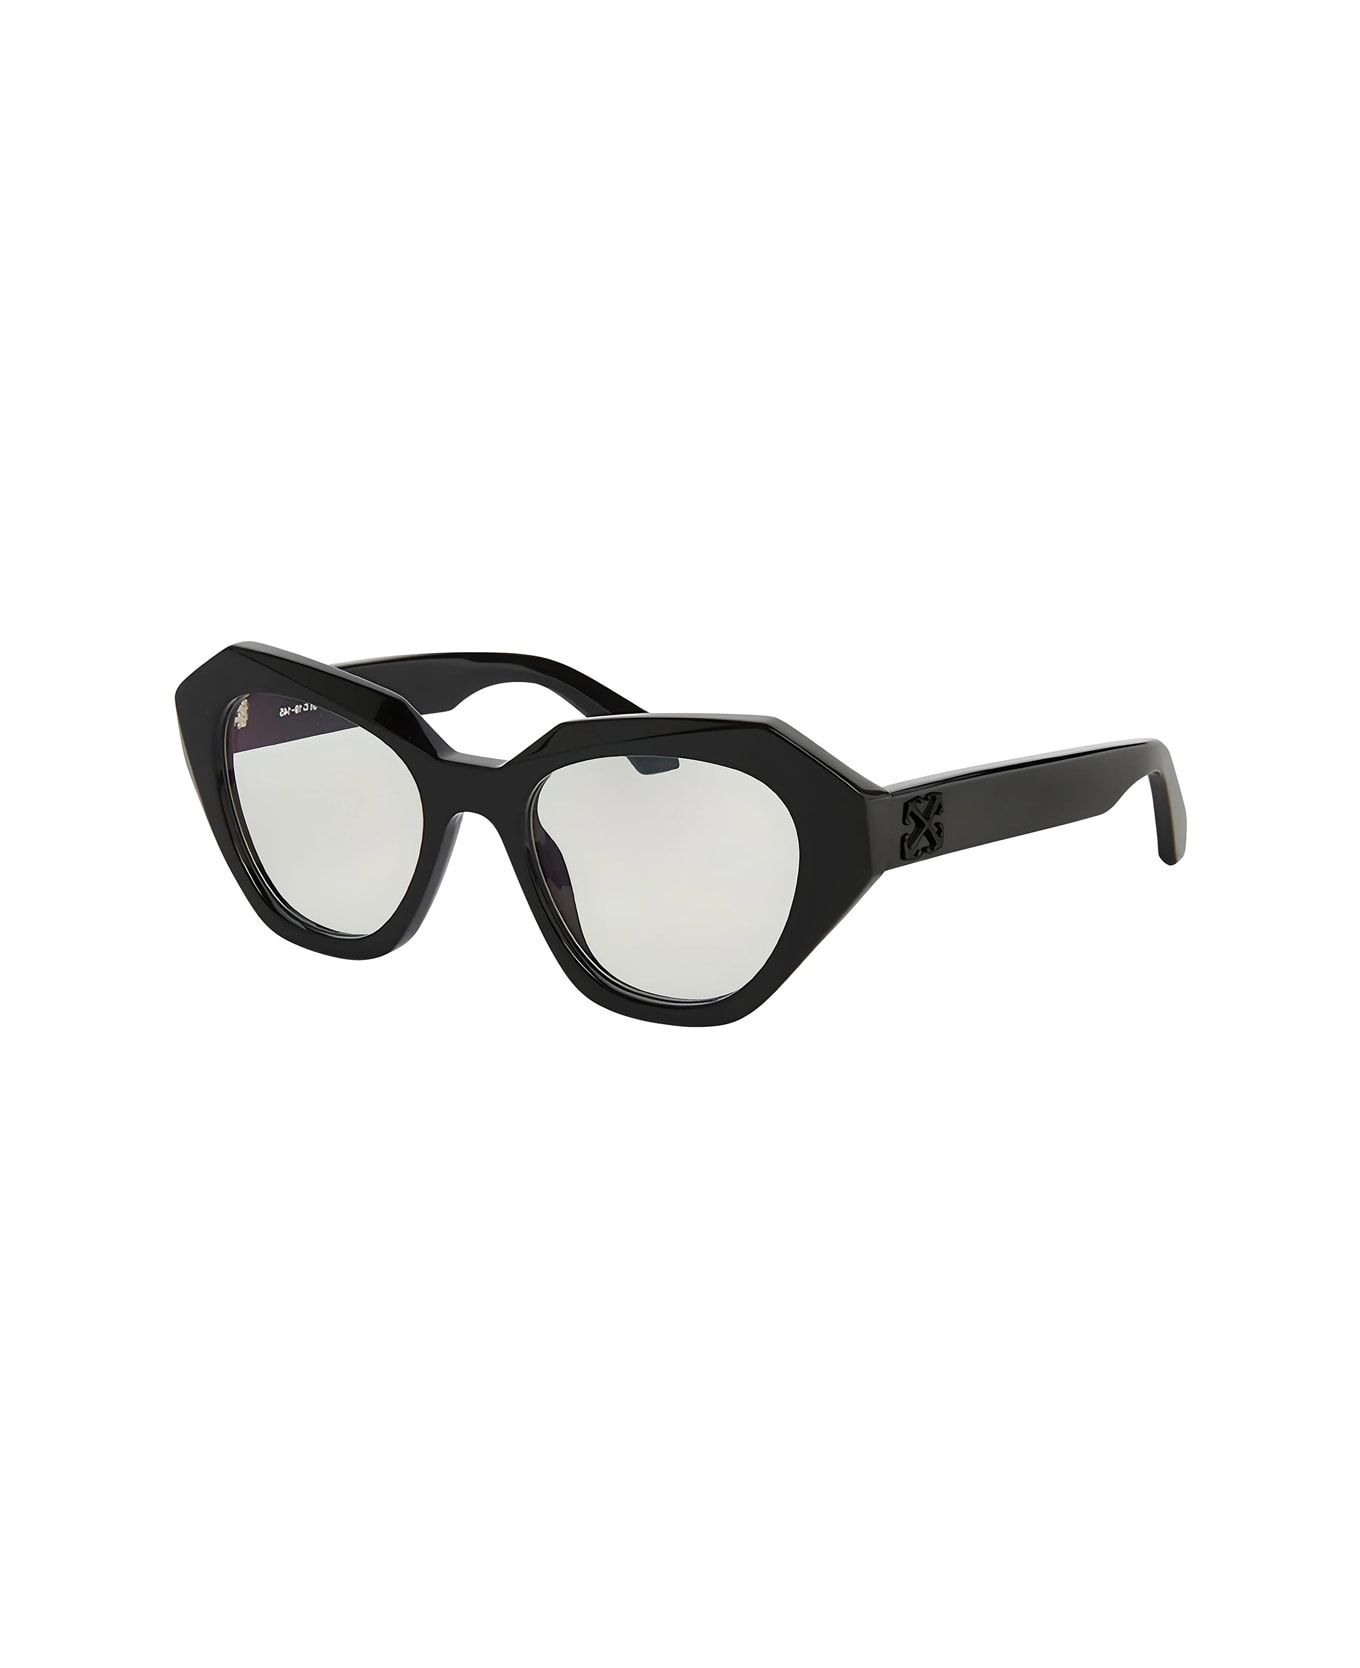 Off-White Off White Oerj074 Style 74 1000 Black Glasses - Nero アイウェア